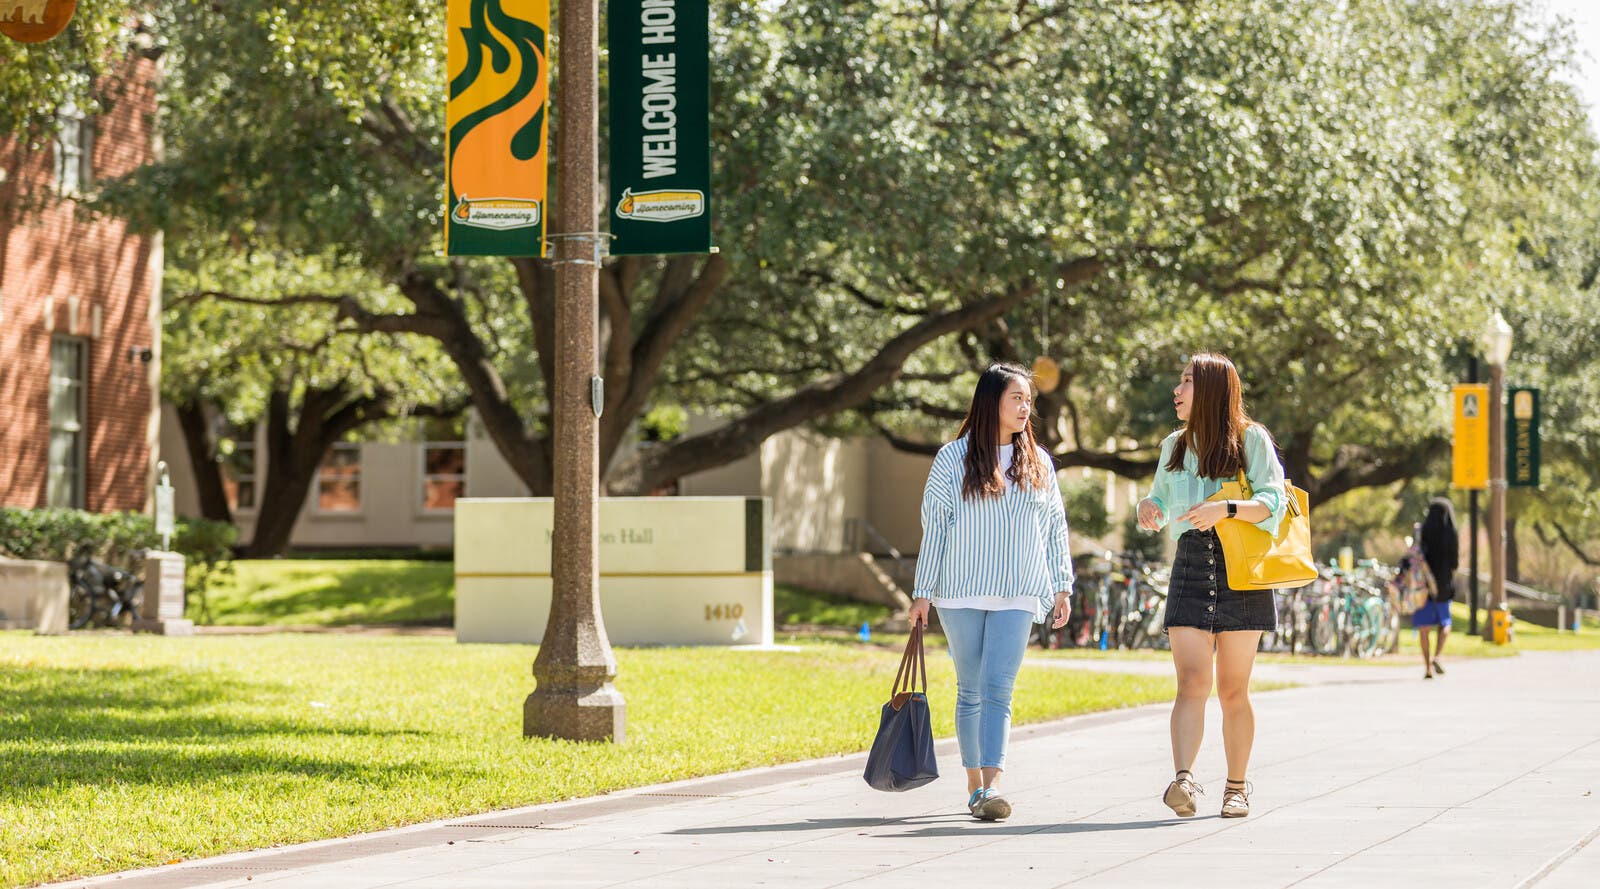 Students walking through Baylor campus